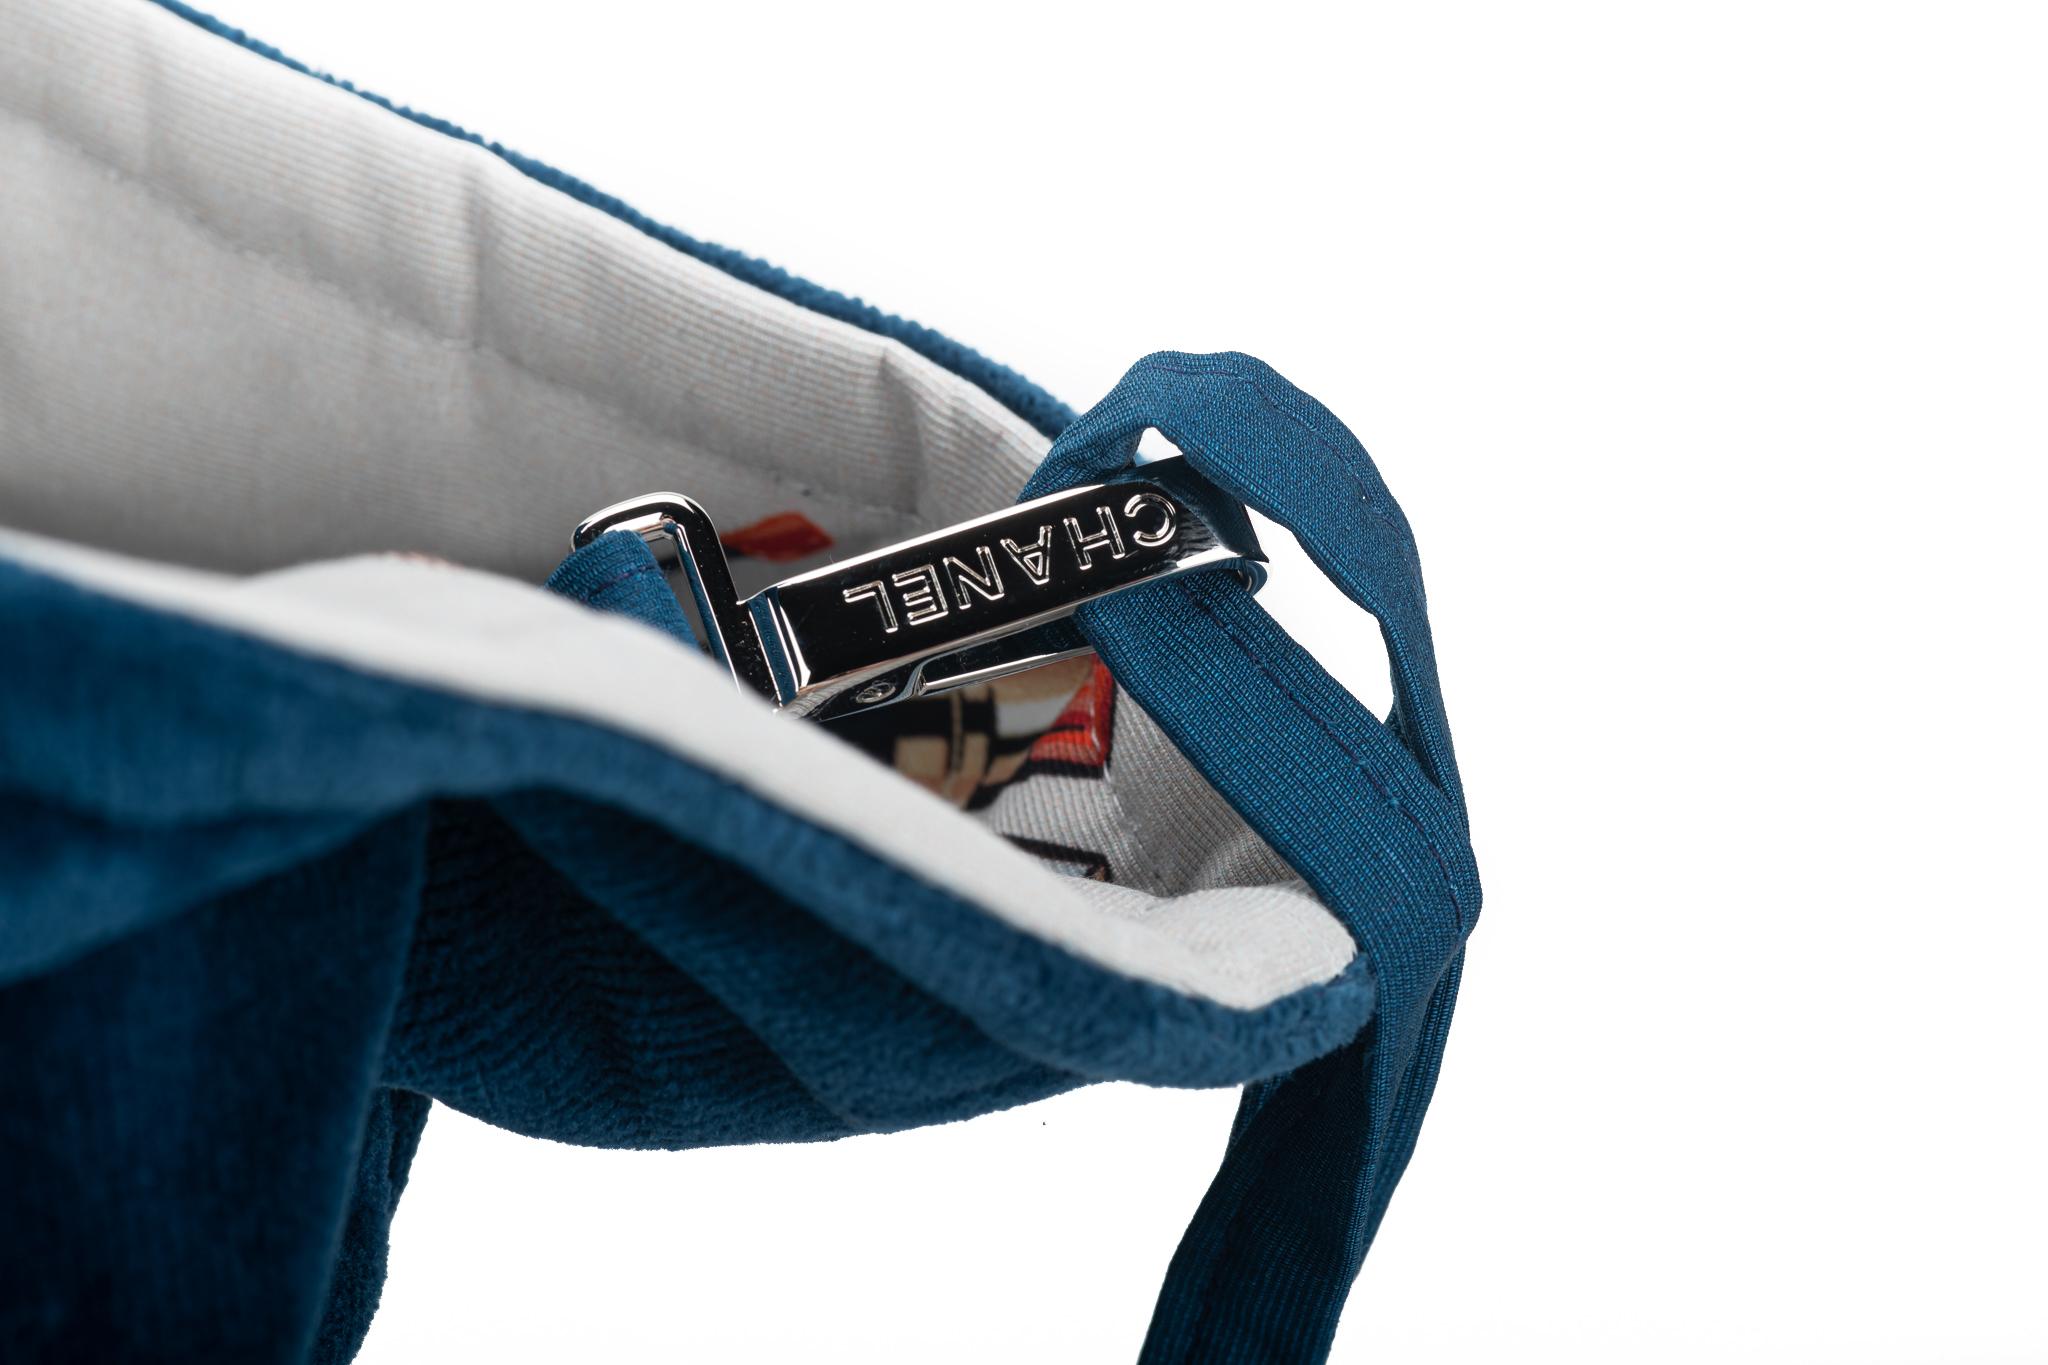 New Chanel Blue Beach Bag Towel Set Iconic Design 4